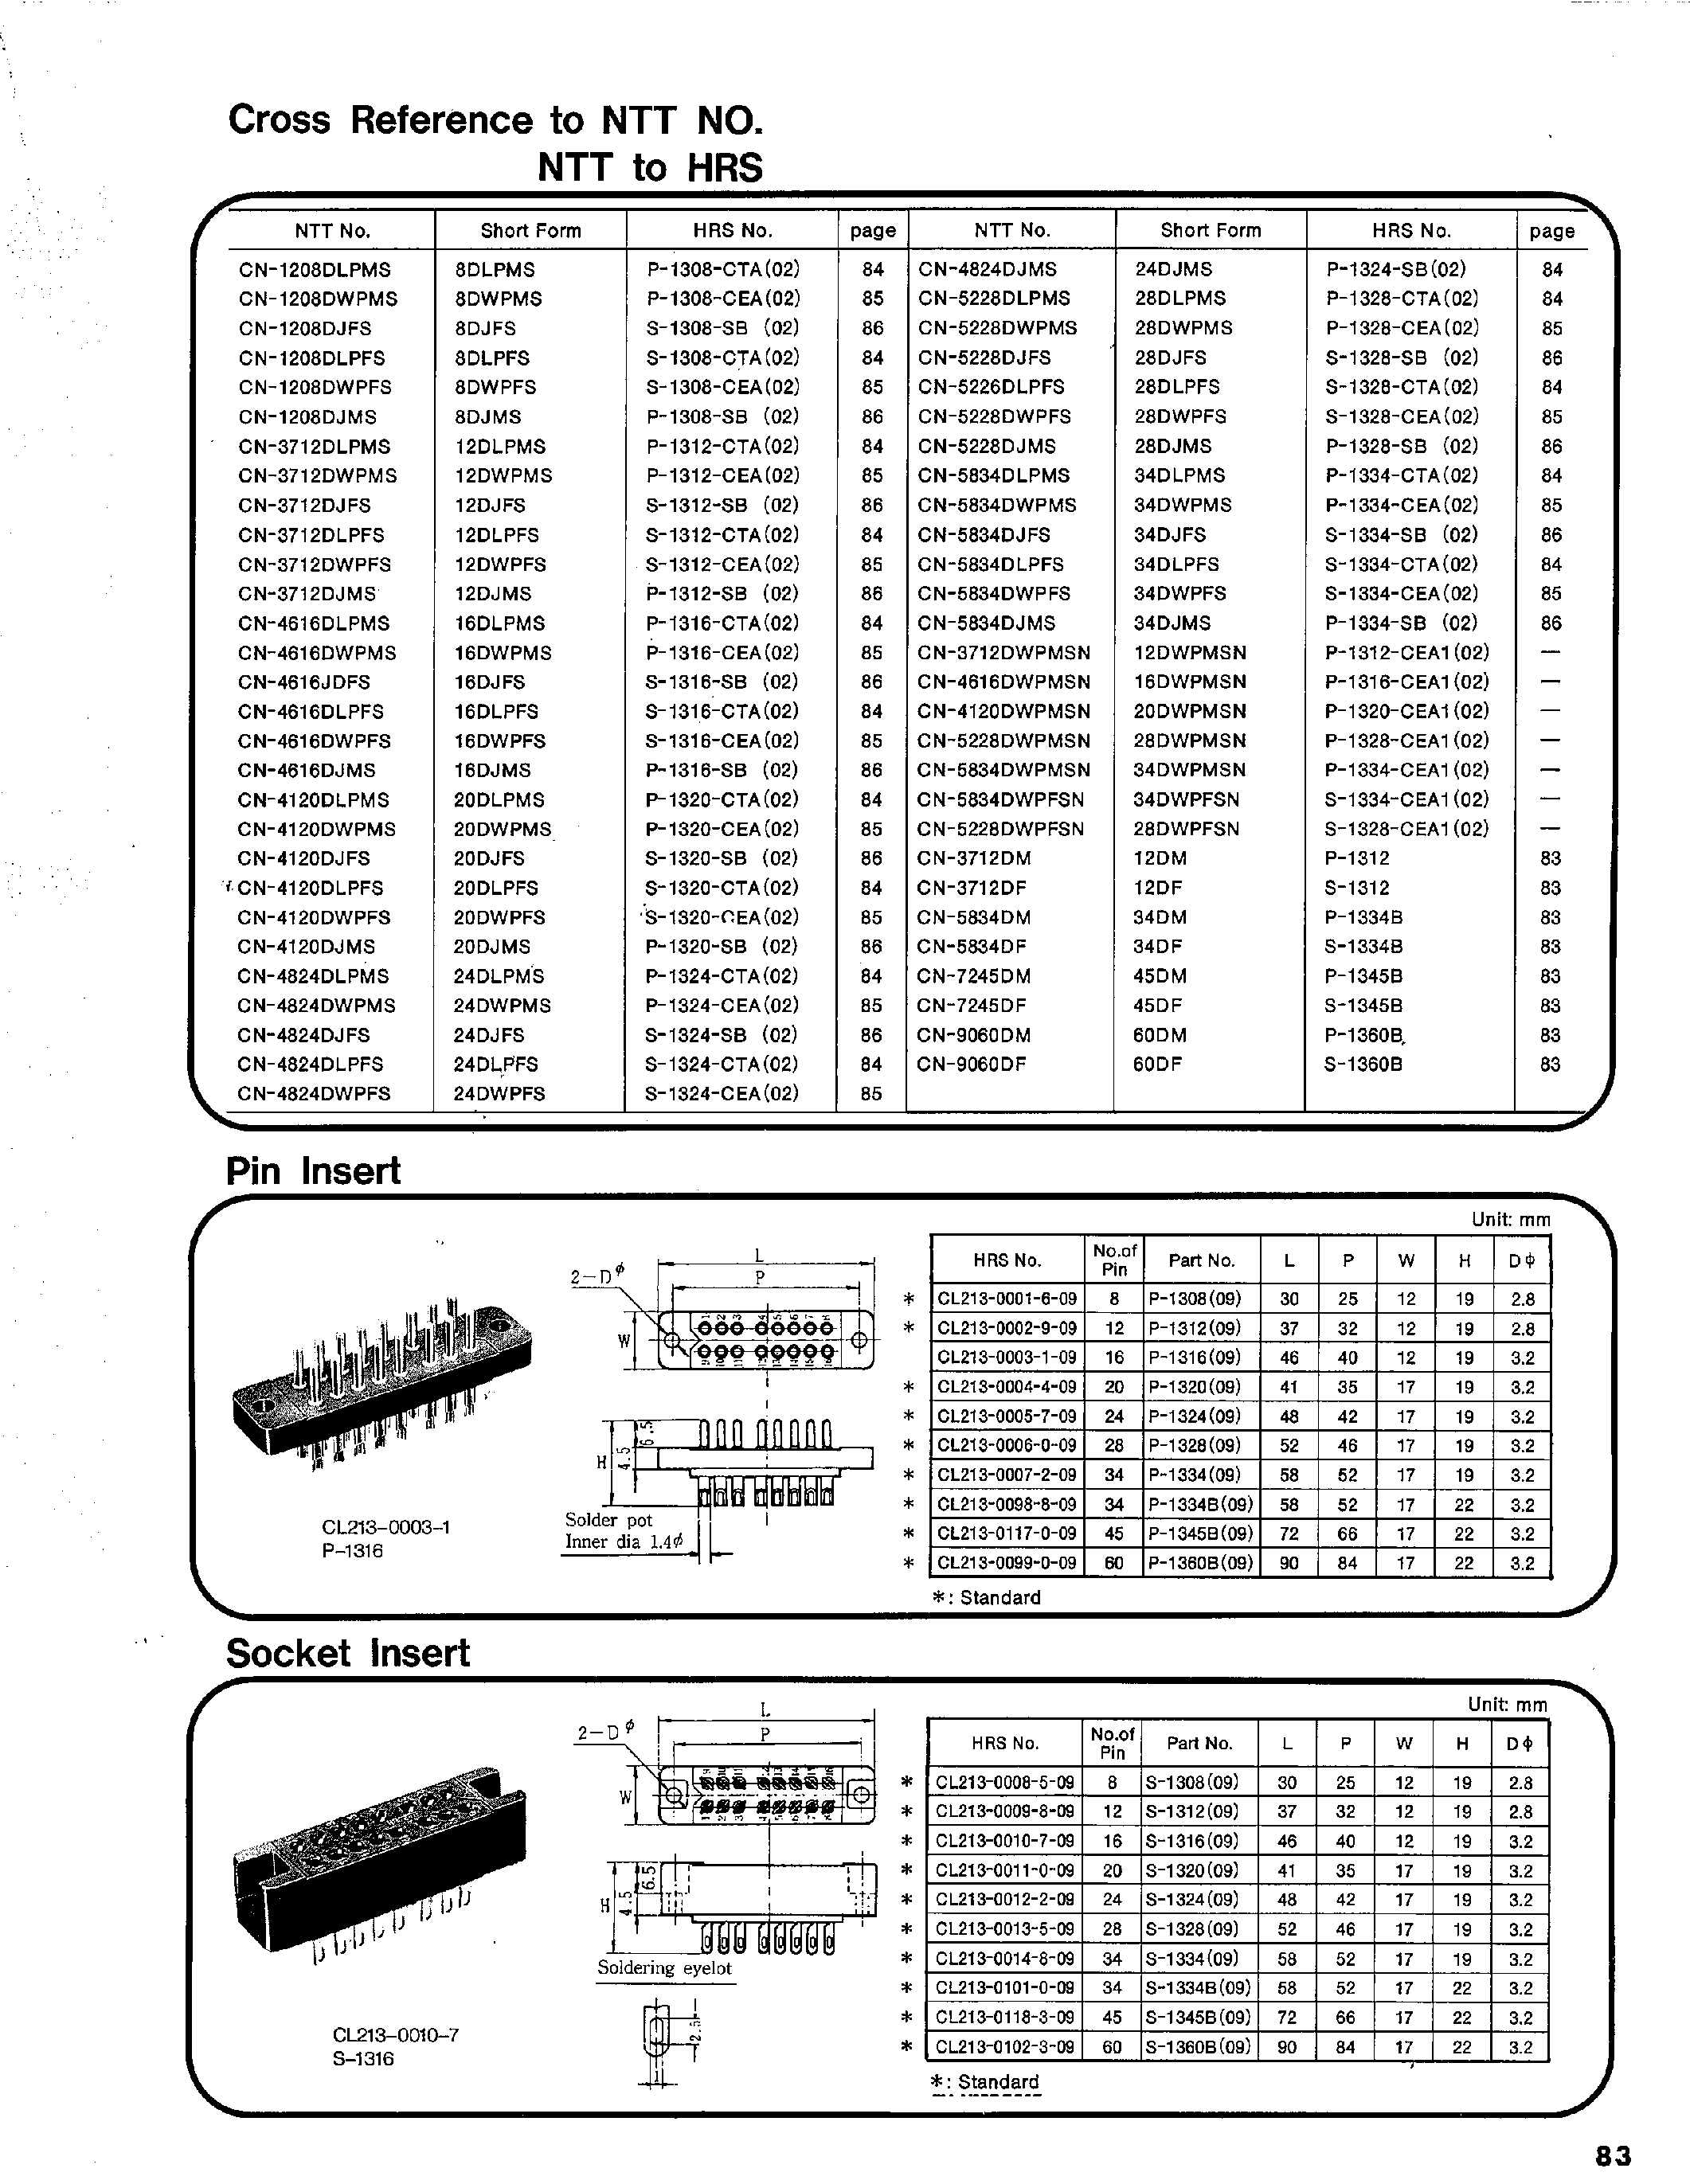 Datasheet P-1324-CE - 1300 SERIES RECTANGULAR CONNECTORS page 2